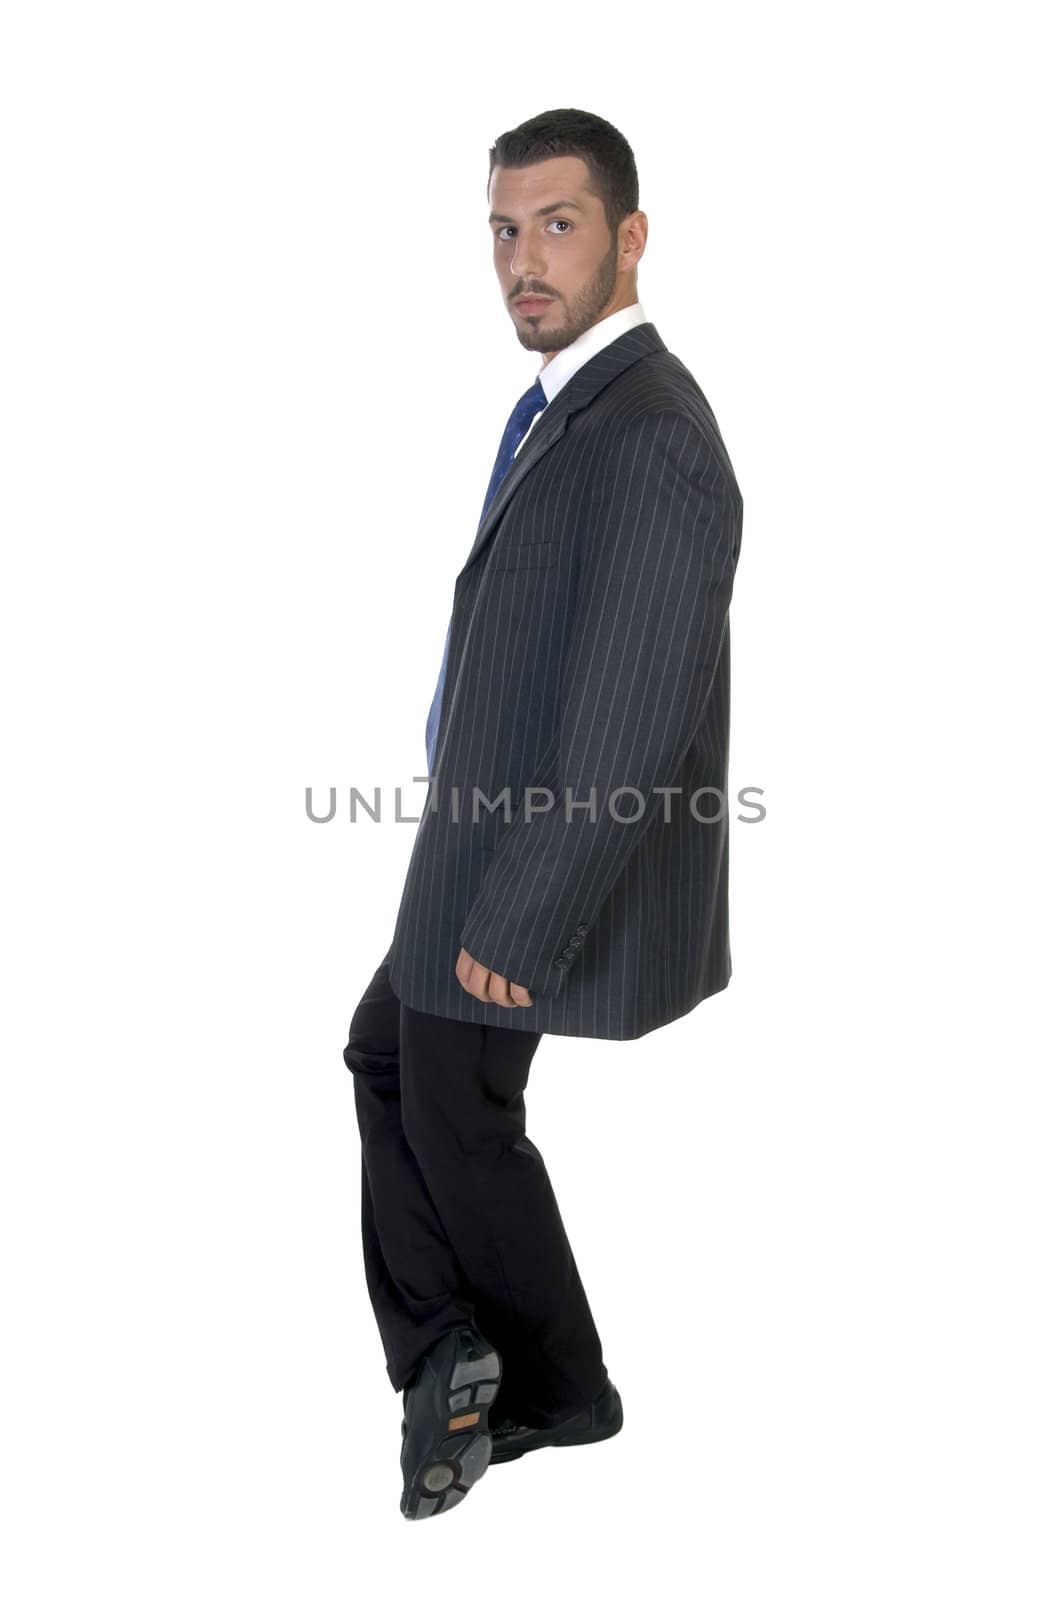 stylish pose of successful businessman by imagerymajestic